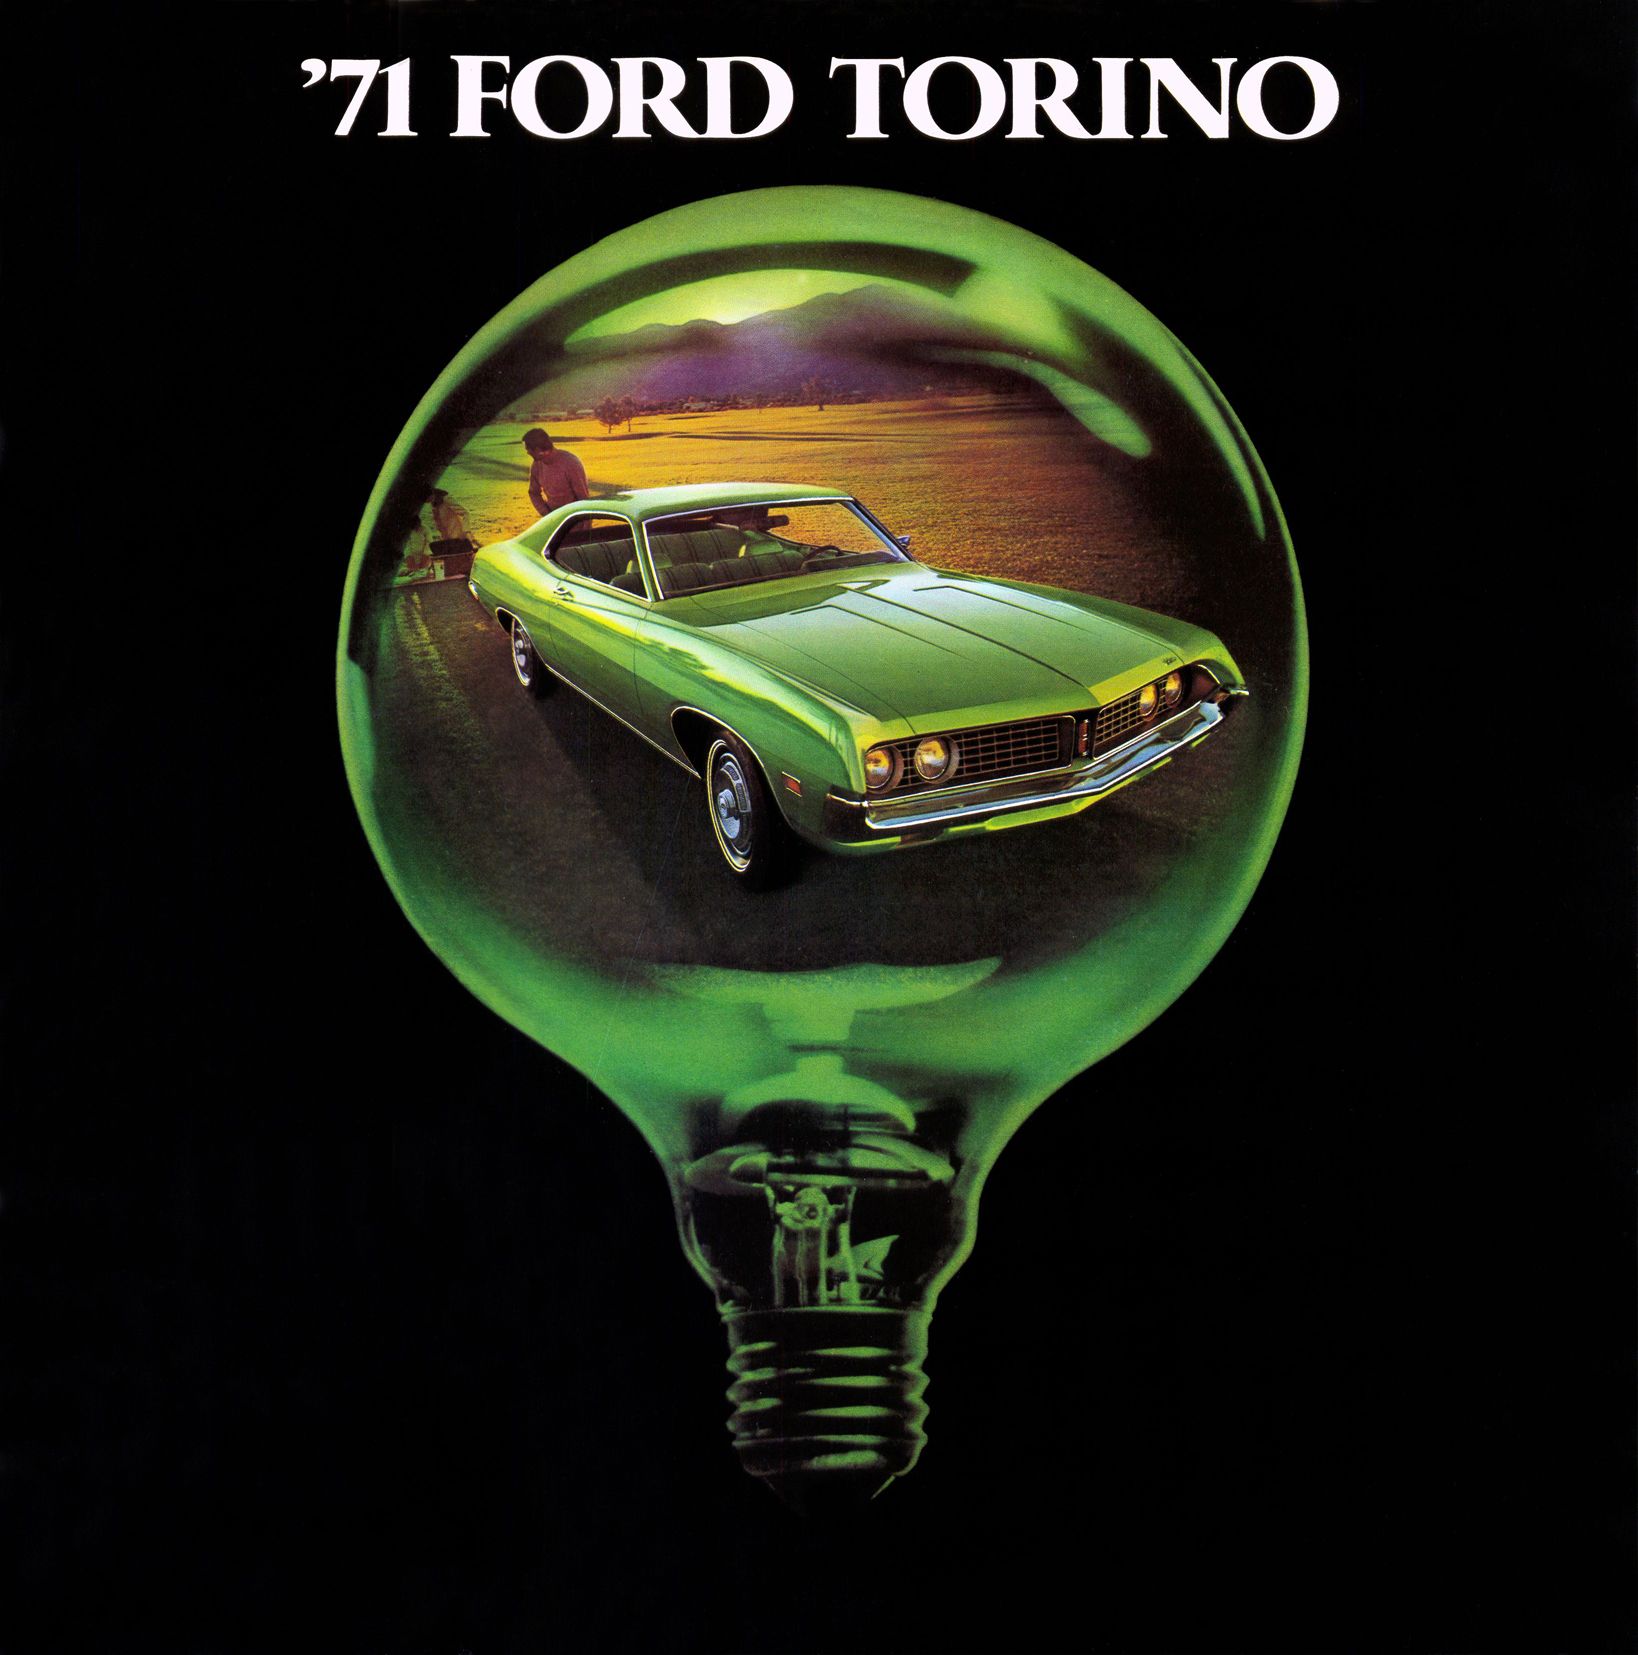 1971 Ford Torino Brochure